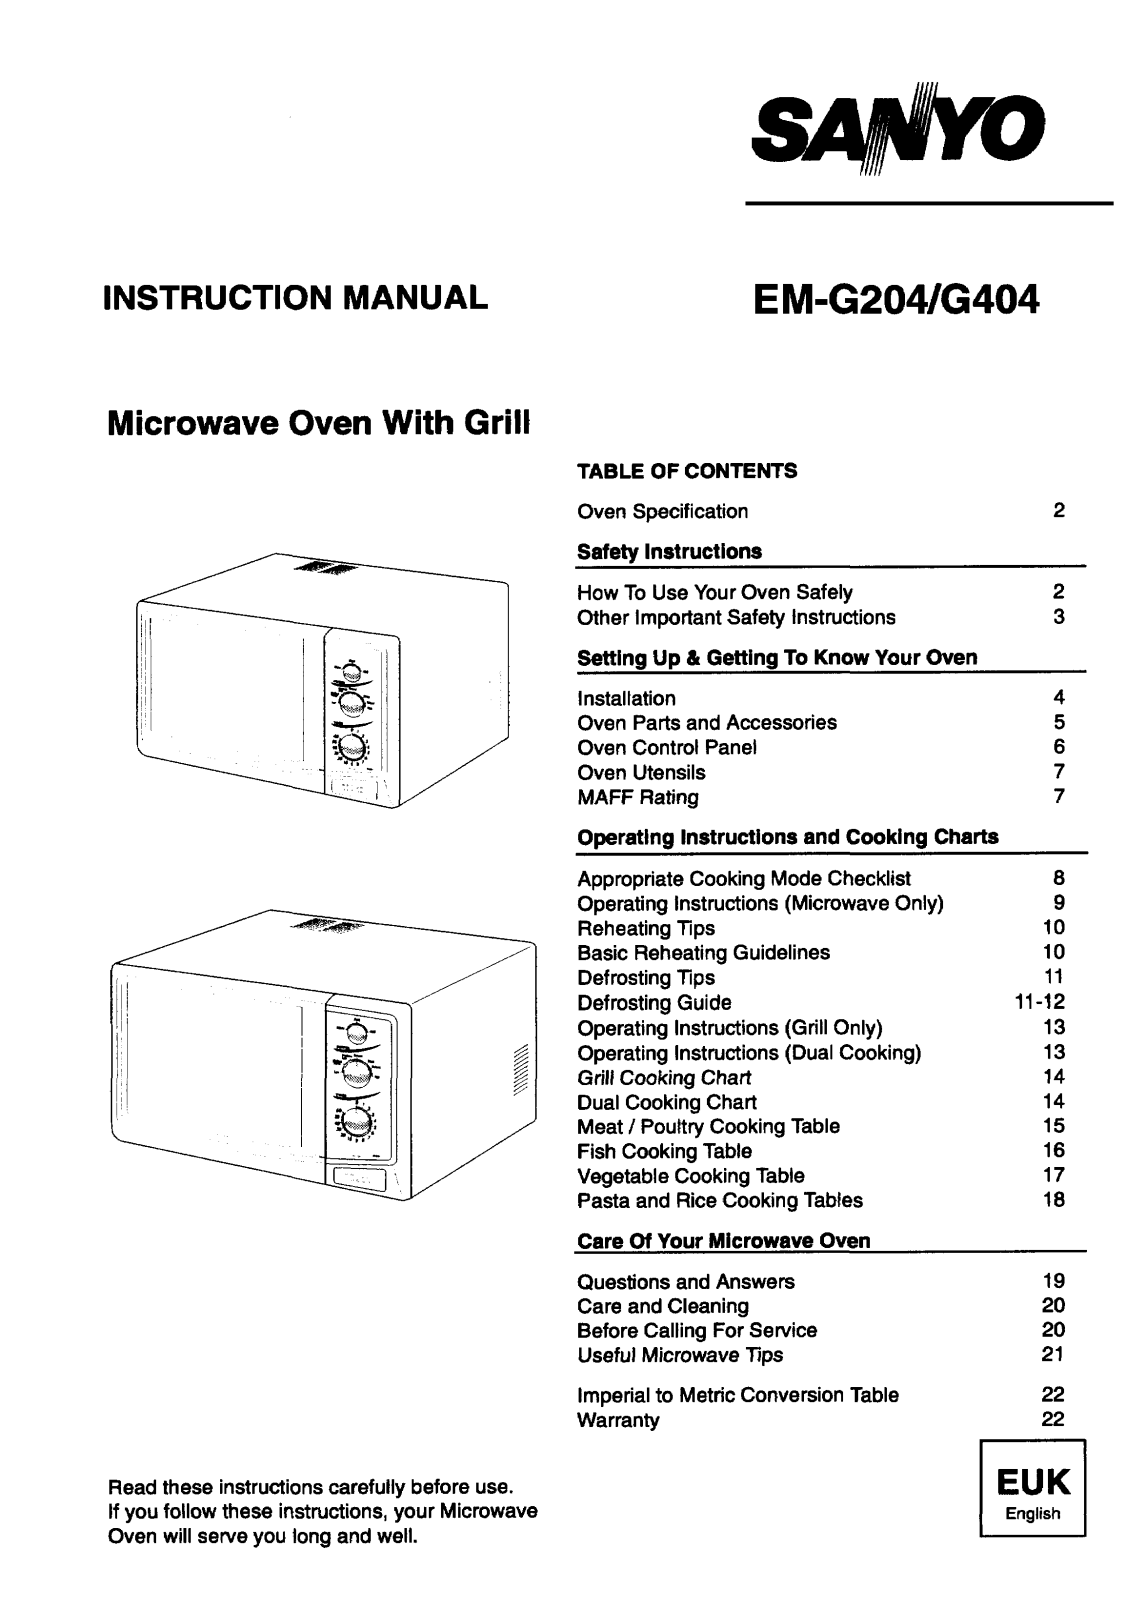 Sanyo EM-G204, EM-G404 Instruction Manual